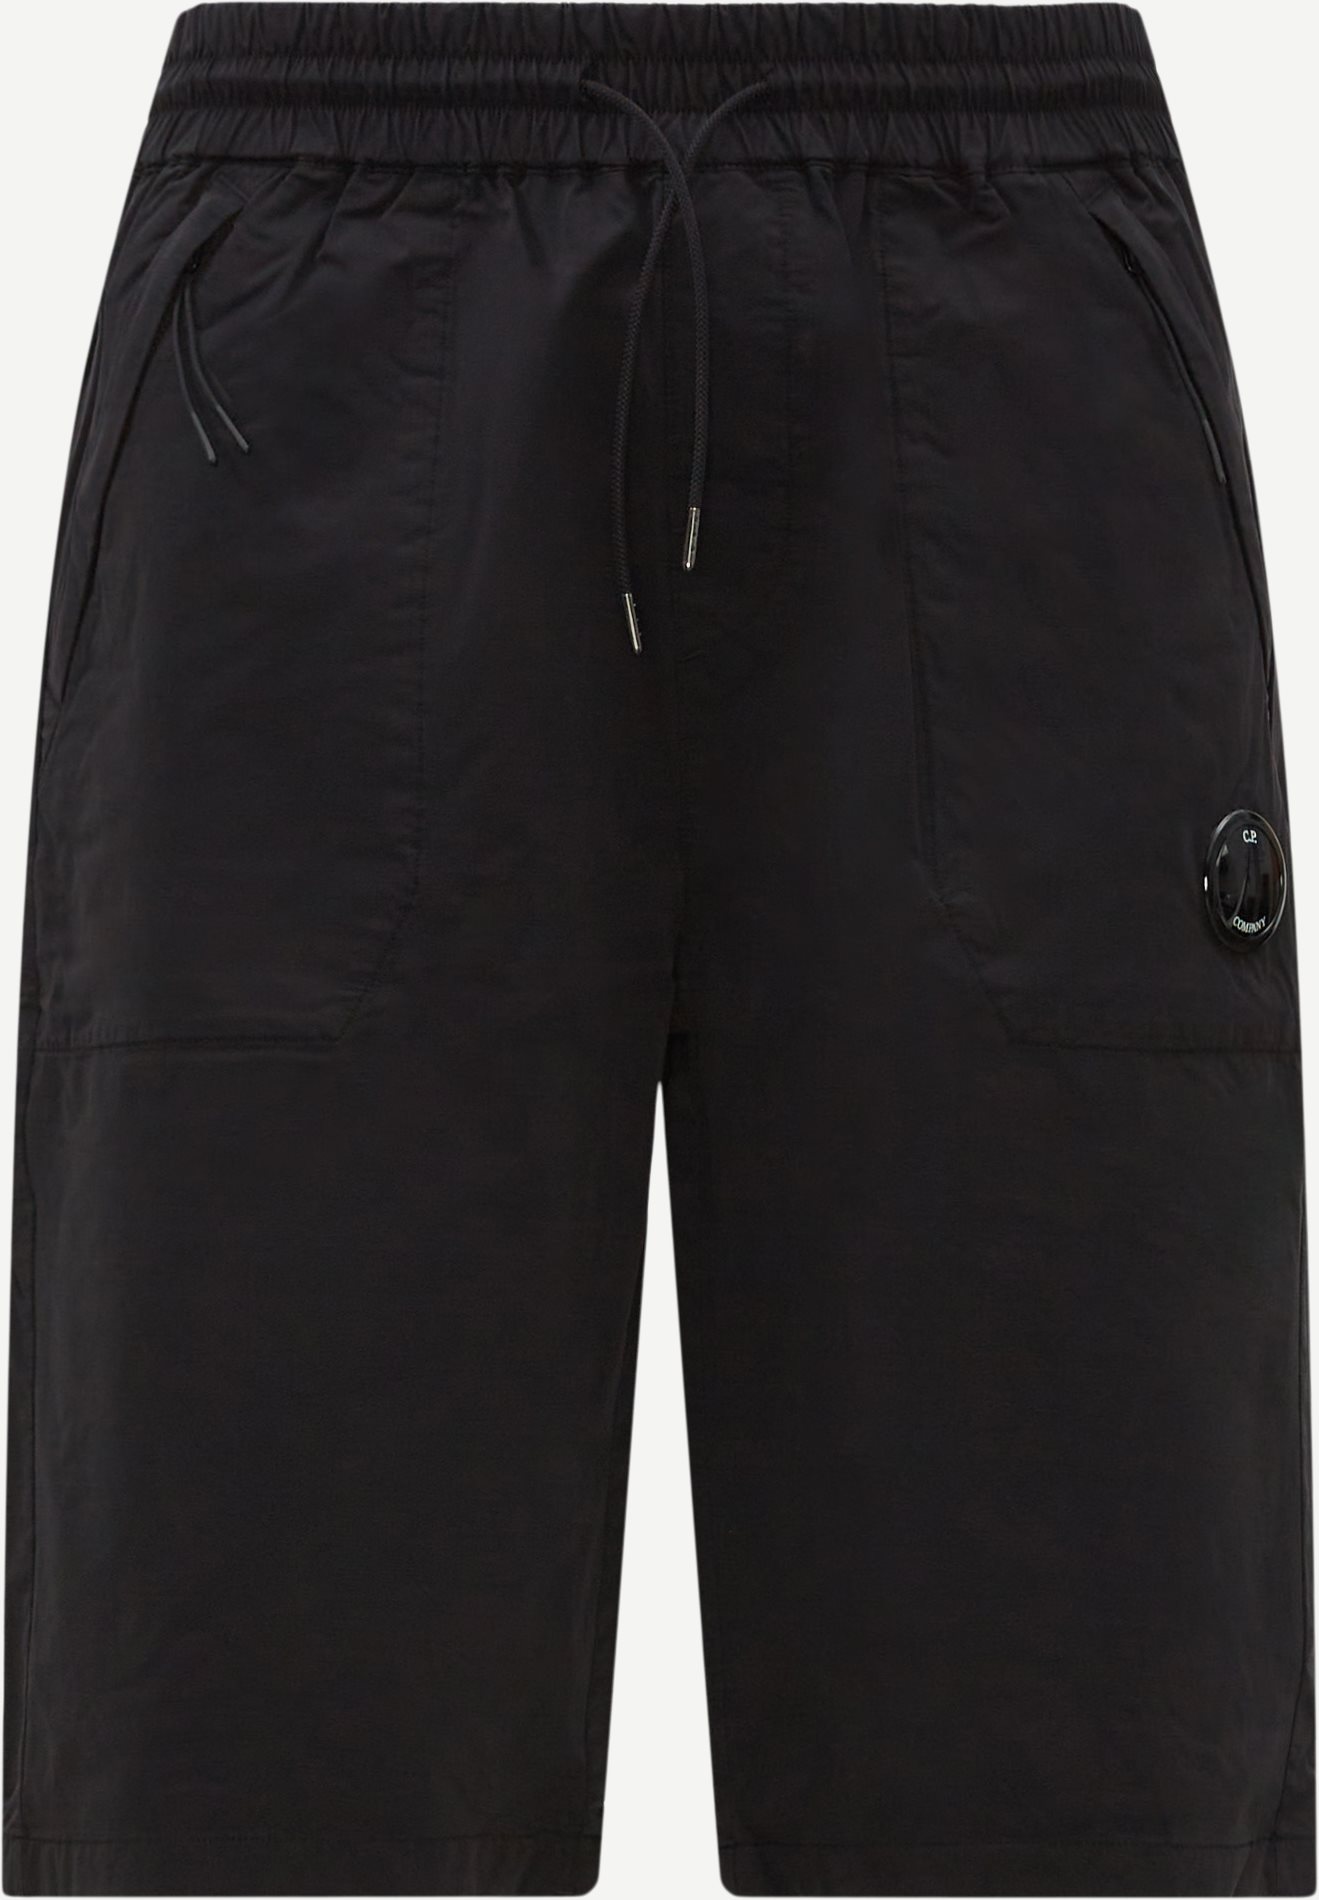 C.P. Company Shorts SB181A 5669G Black